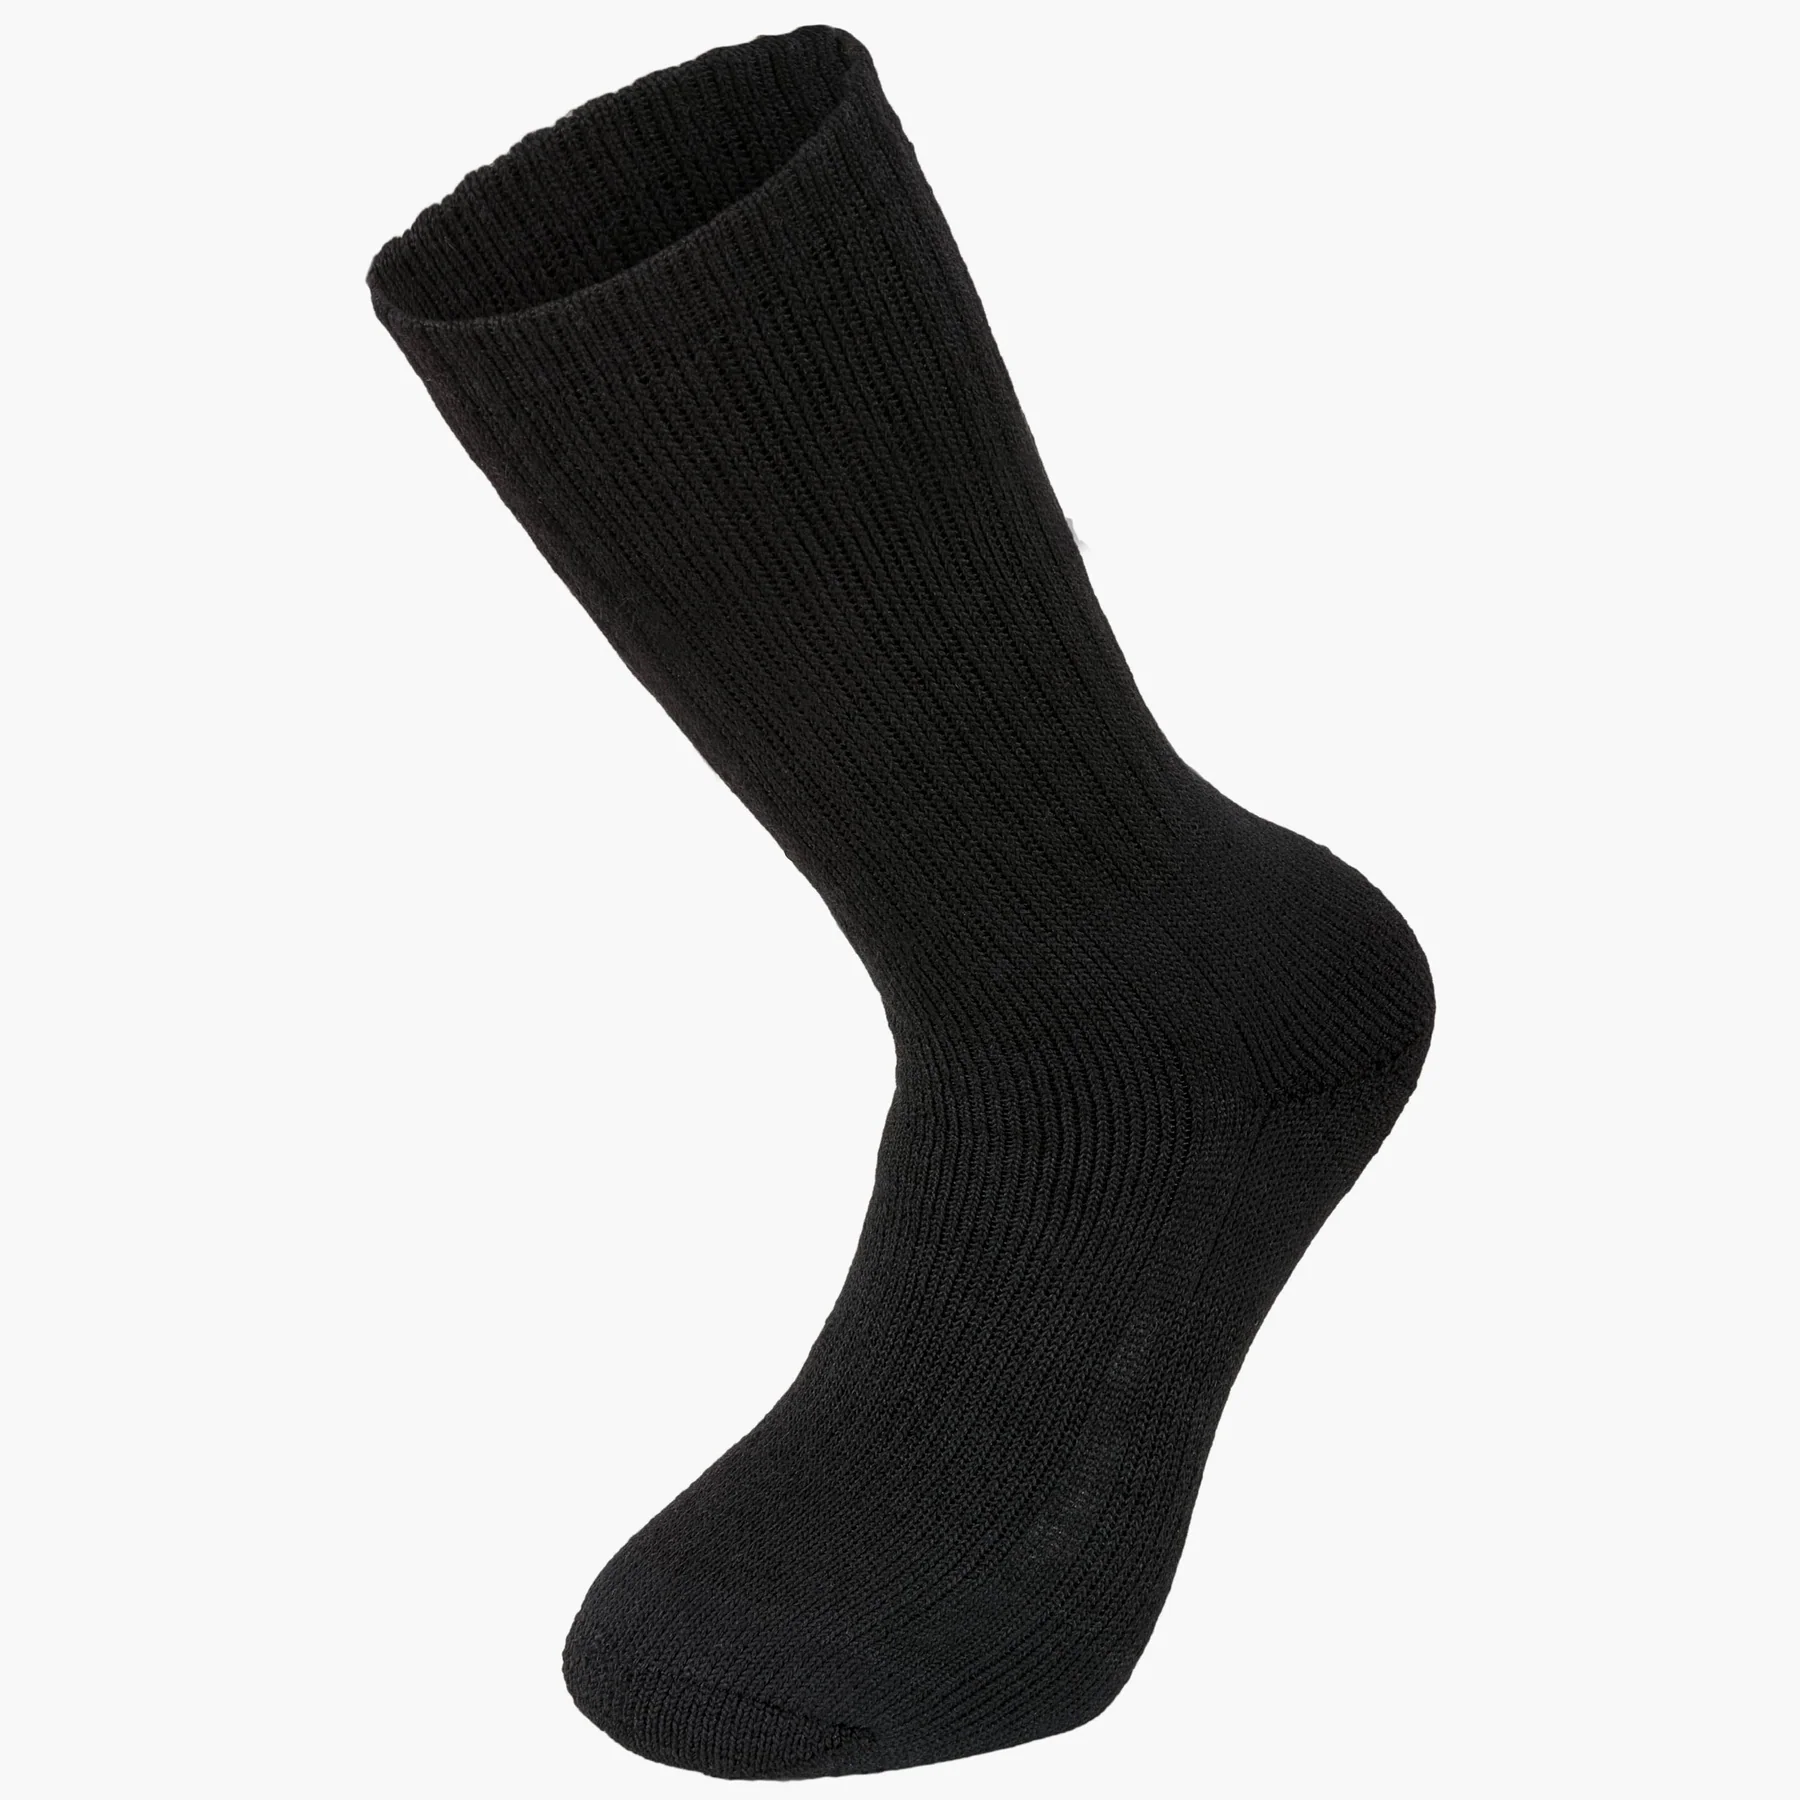 Highlander Forces Norwegian Army Socks- Black